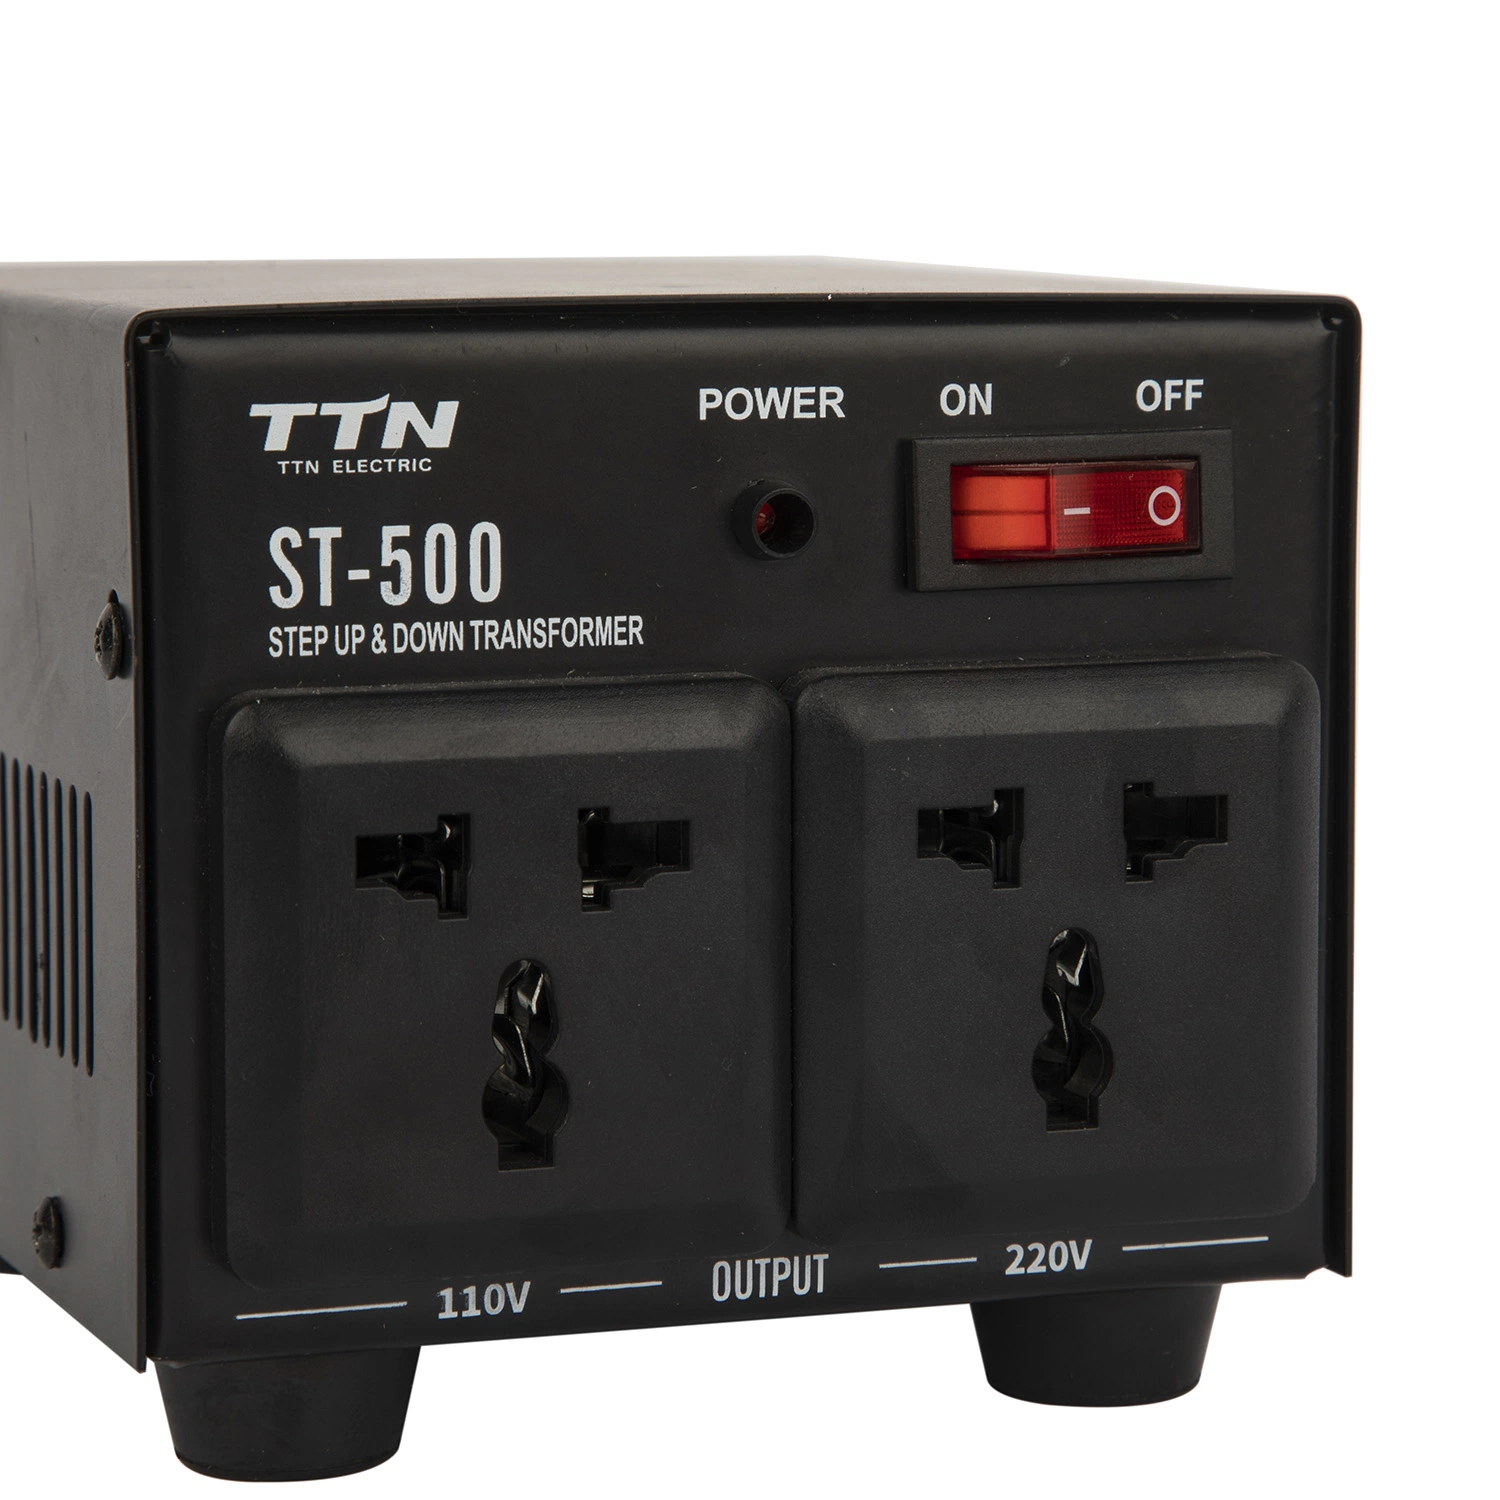 Step Up &amp; Down transformador 110V a 220V / Convertidor de tensión del transformador de potencia electrónica